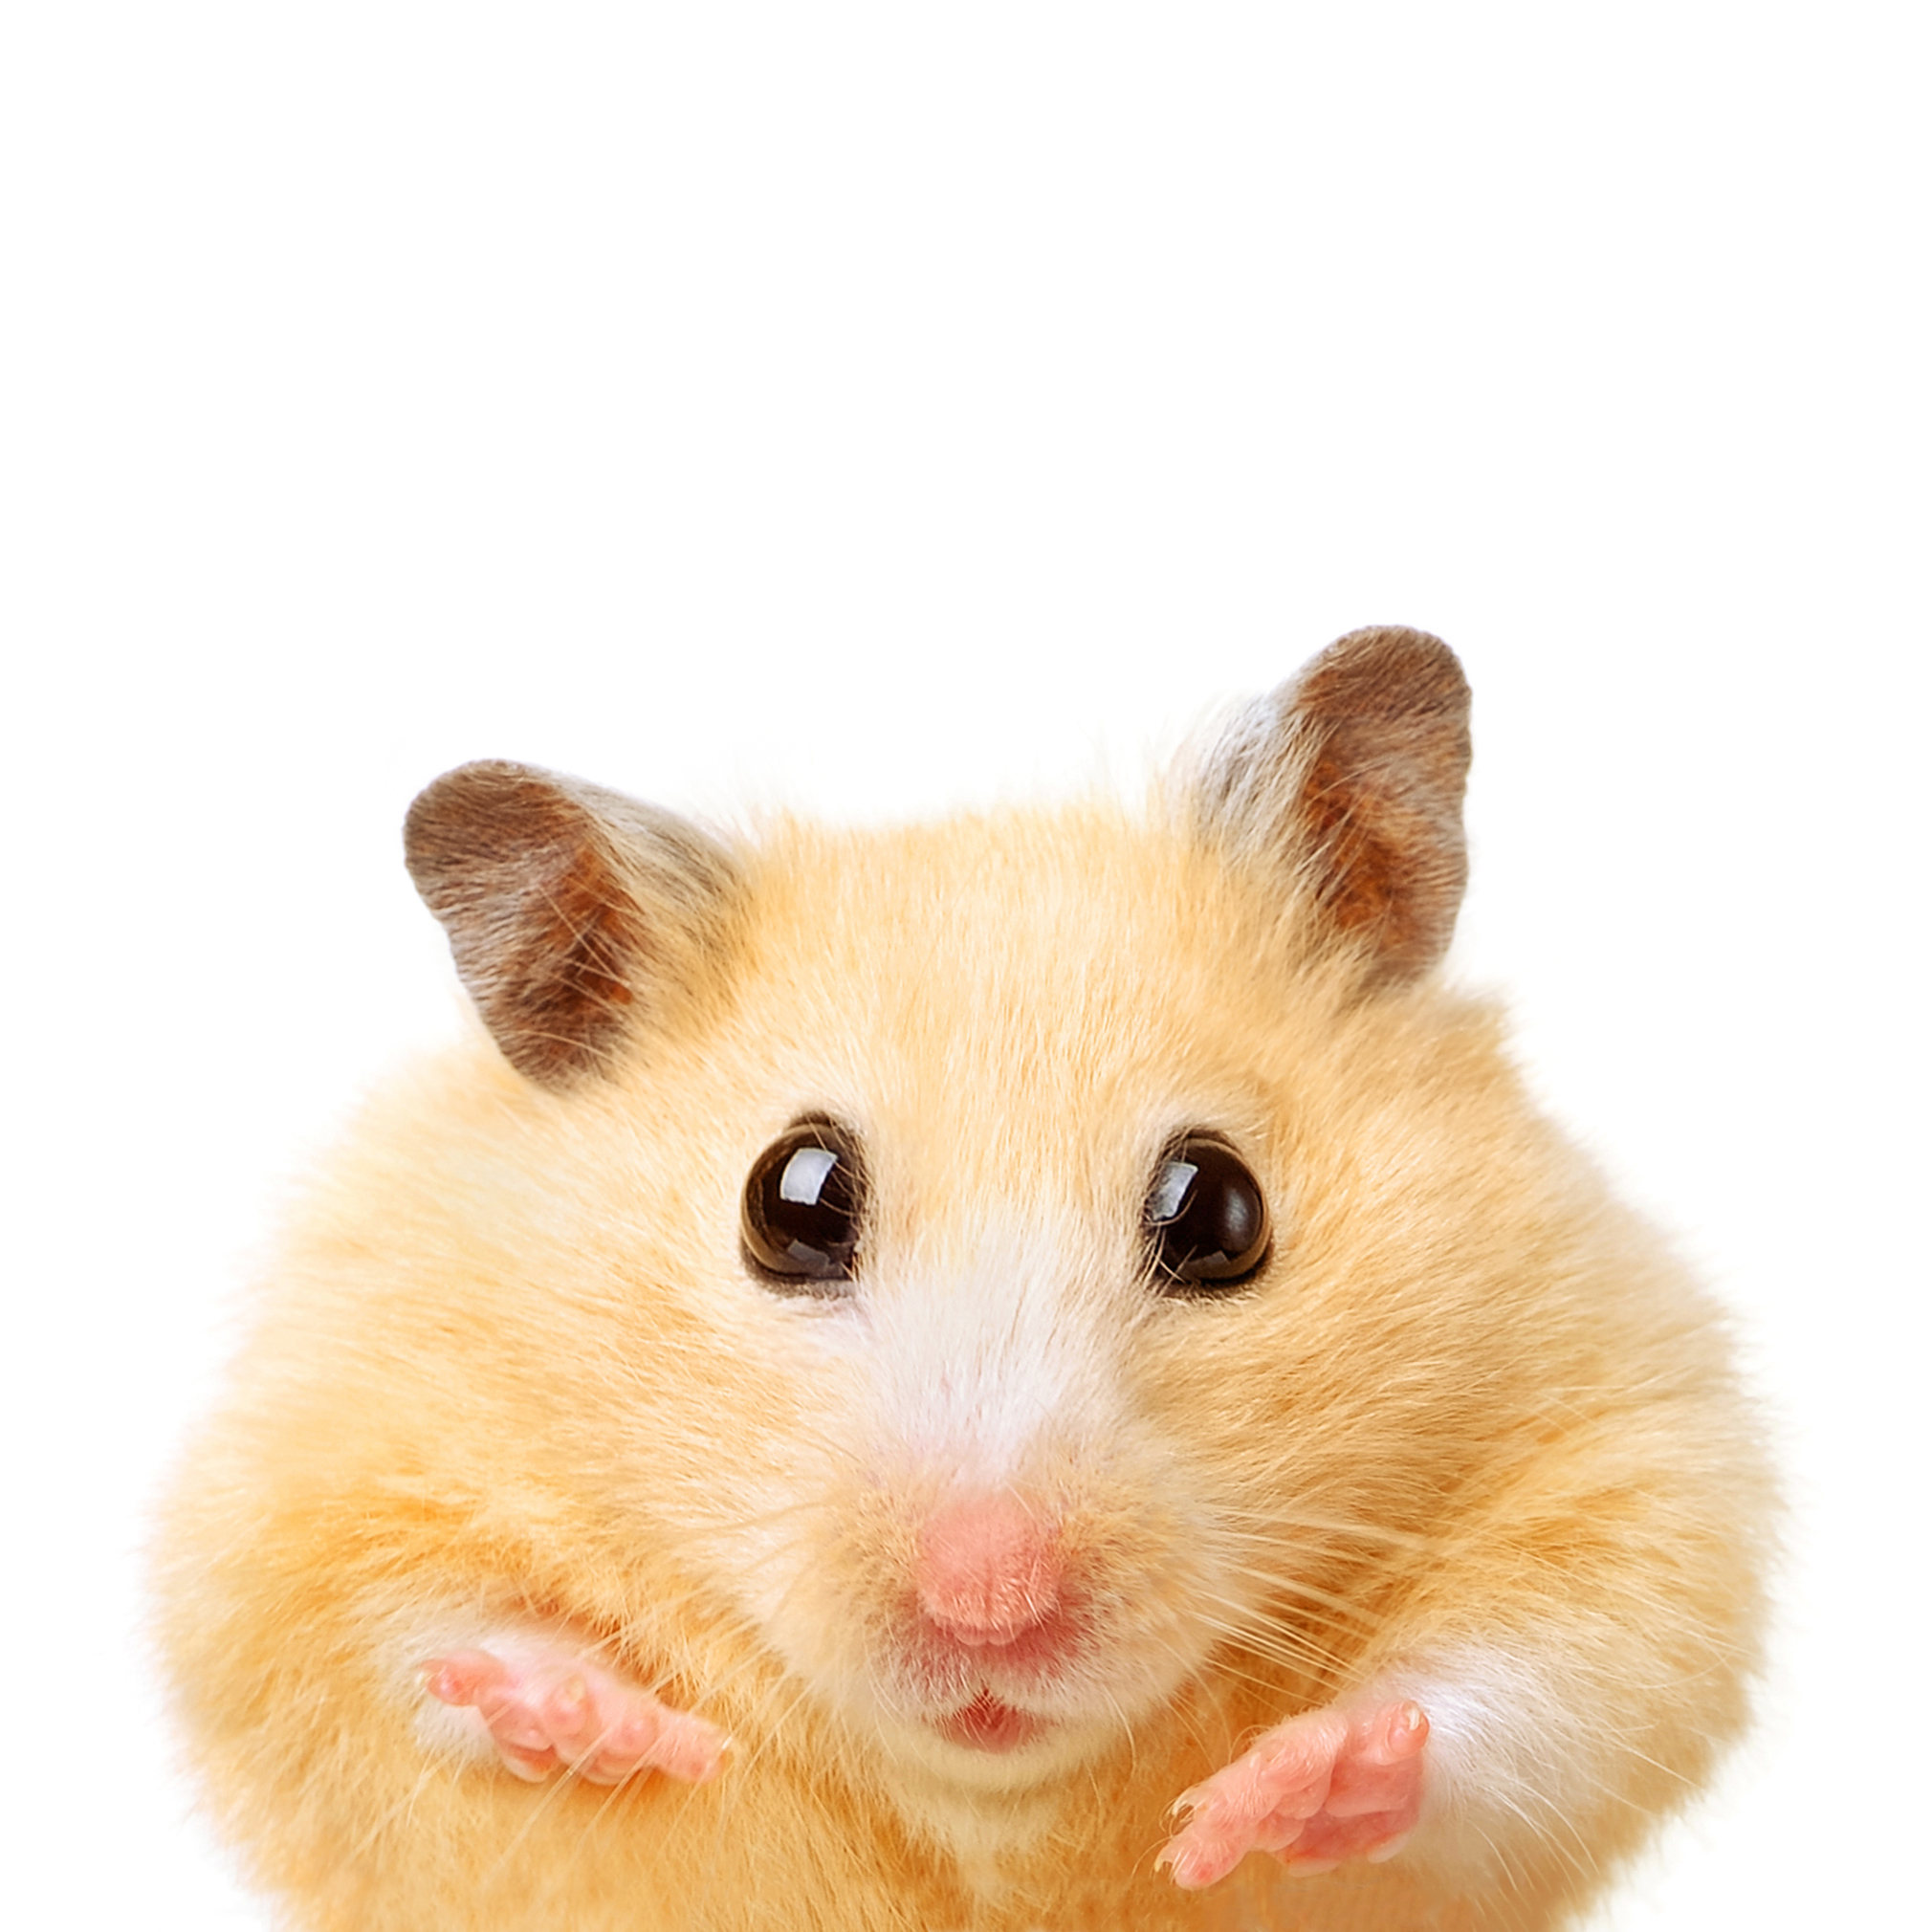 Pet hamster